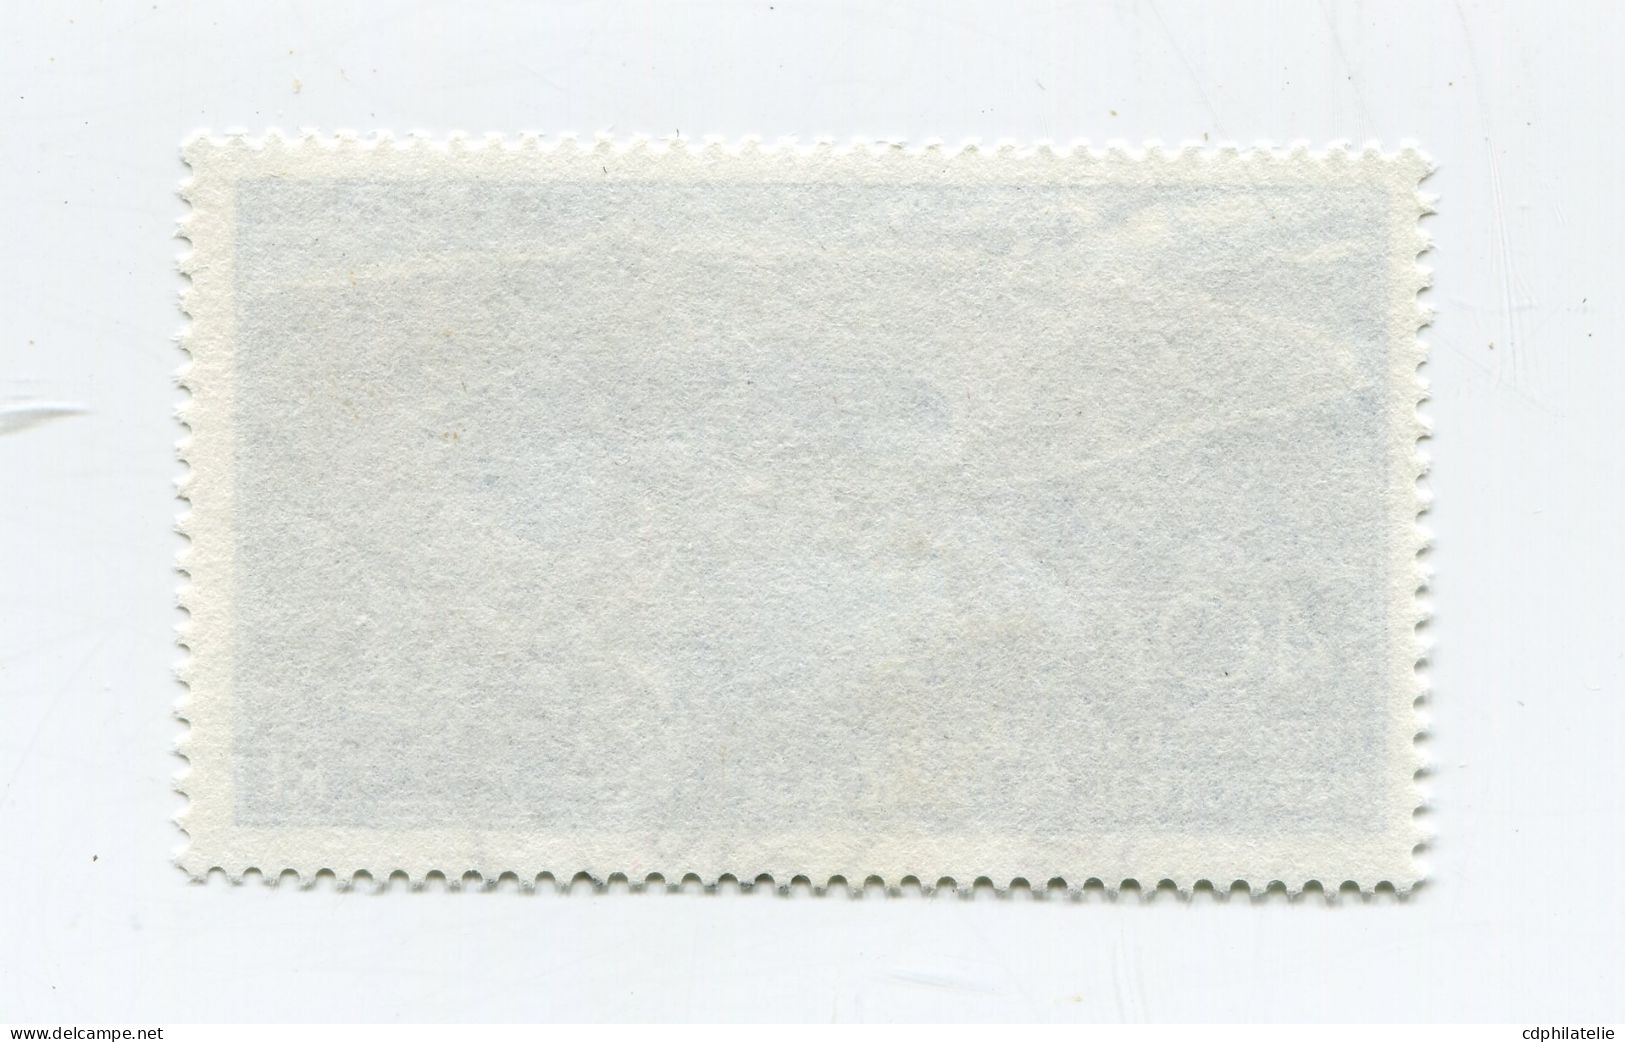 T. A. A. F.  PA 17 O ILE SAINT-PAUL - Used Stamps